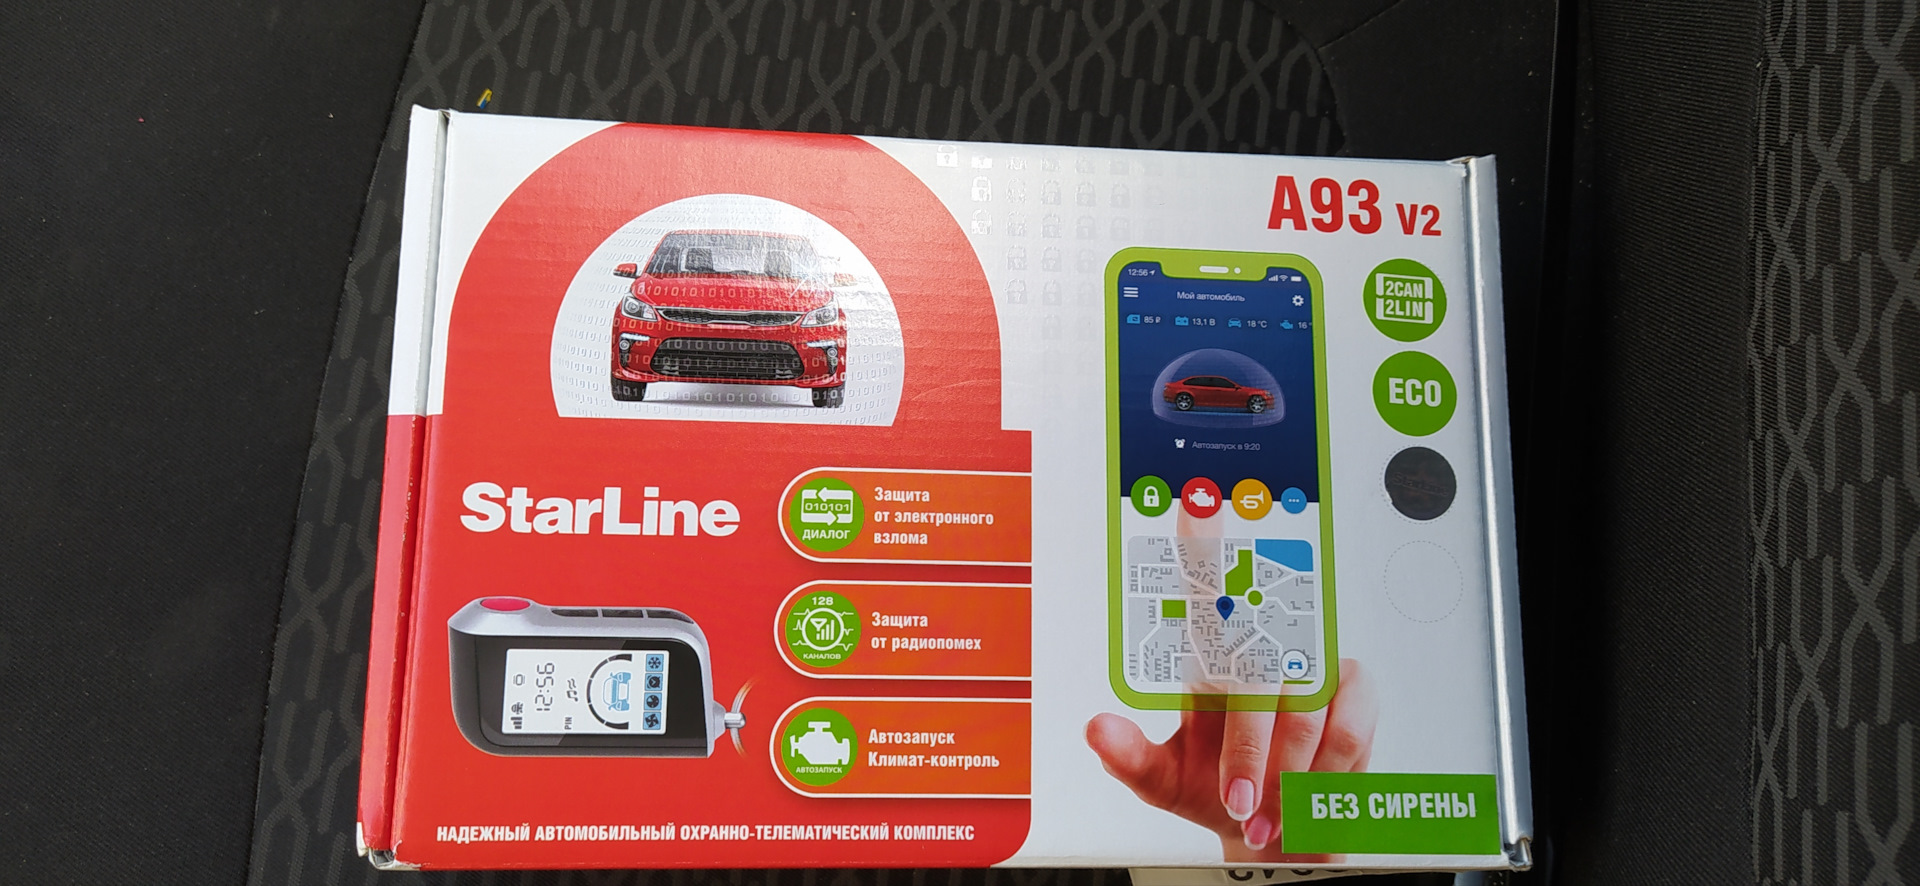 A93 2can 2lin gsm. STARLINE a93 v2 Eco. Автосигнализация STARLINE a93 v2 2can+2lin GSM Eco. Старлайн а93 2 Кан 2 Лин эко. STARLINE a93 Eco.